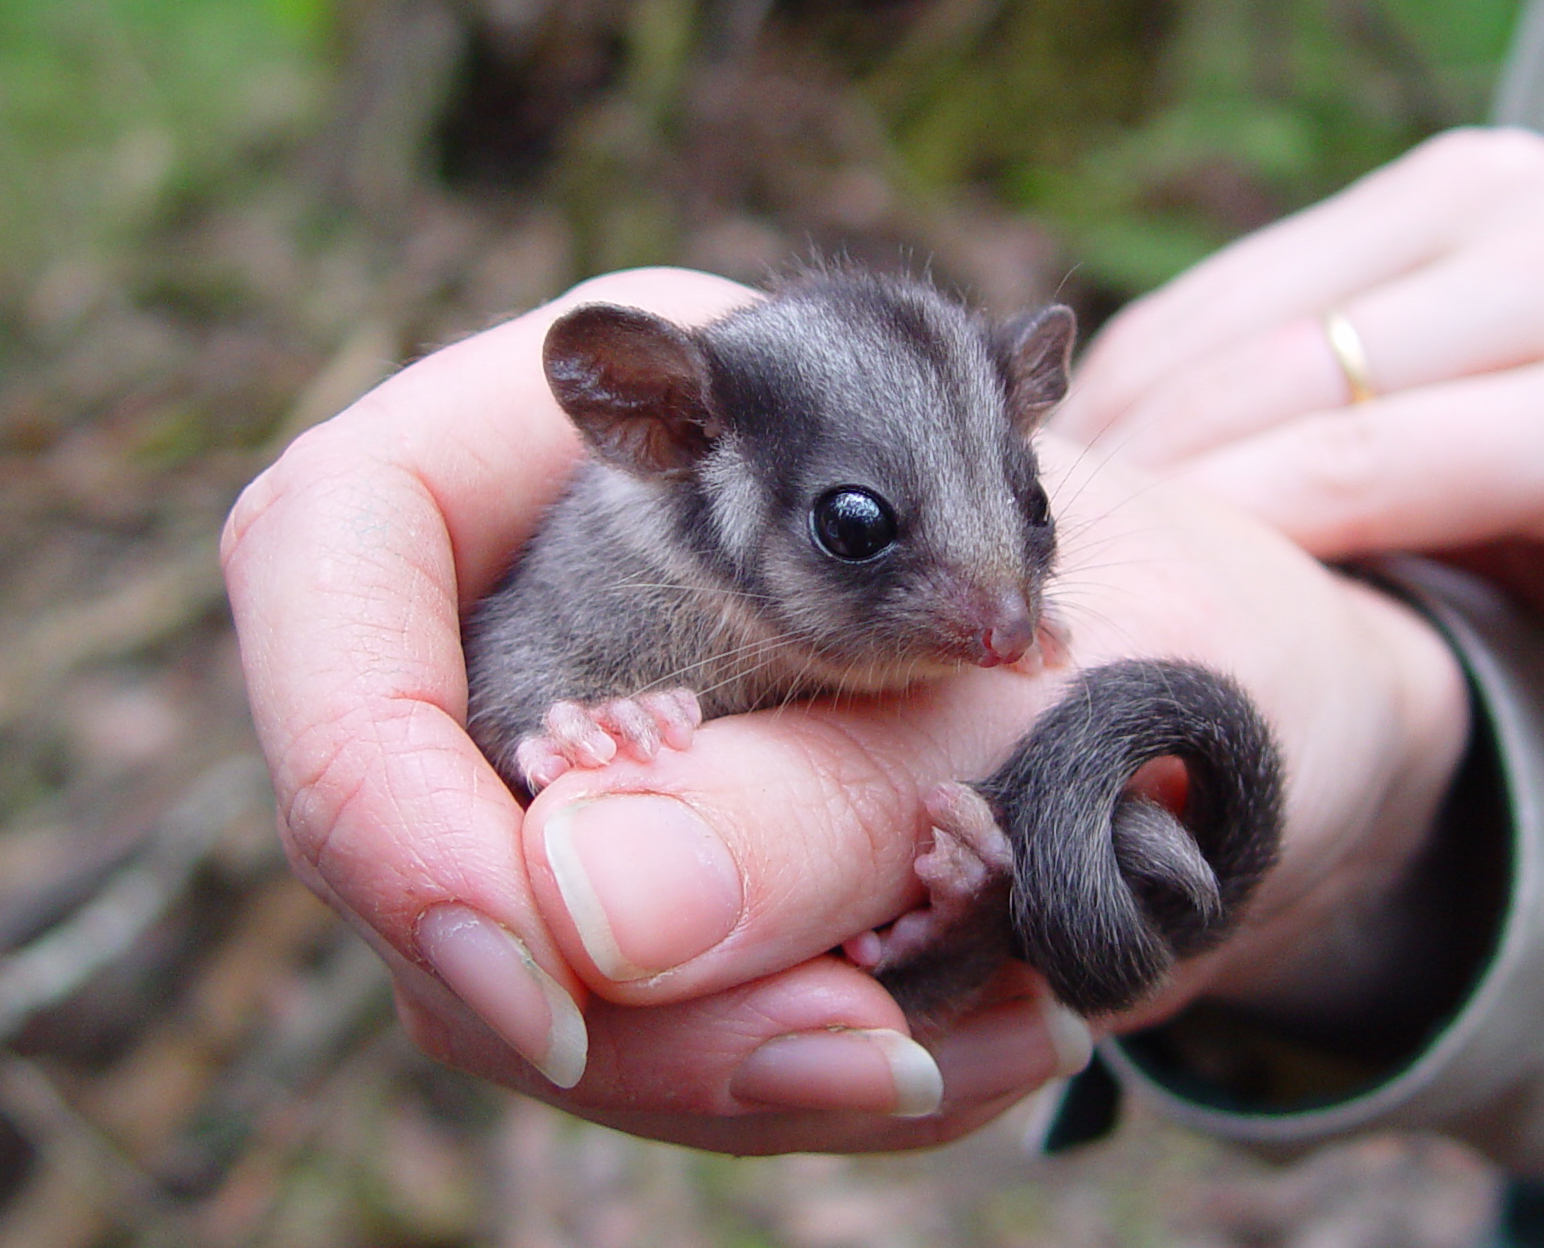 Leadbeater's Possum faces extinction if logging continues